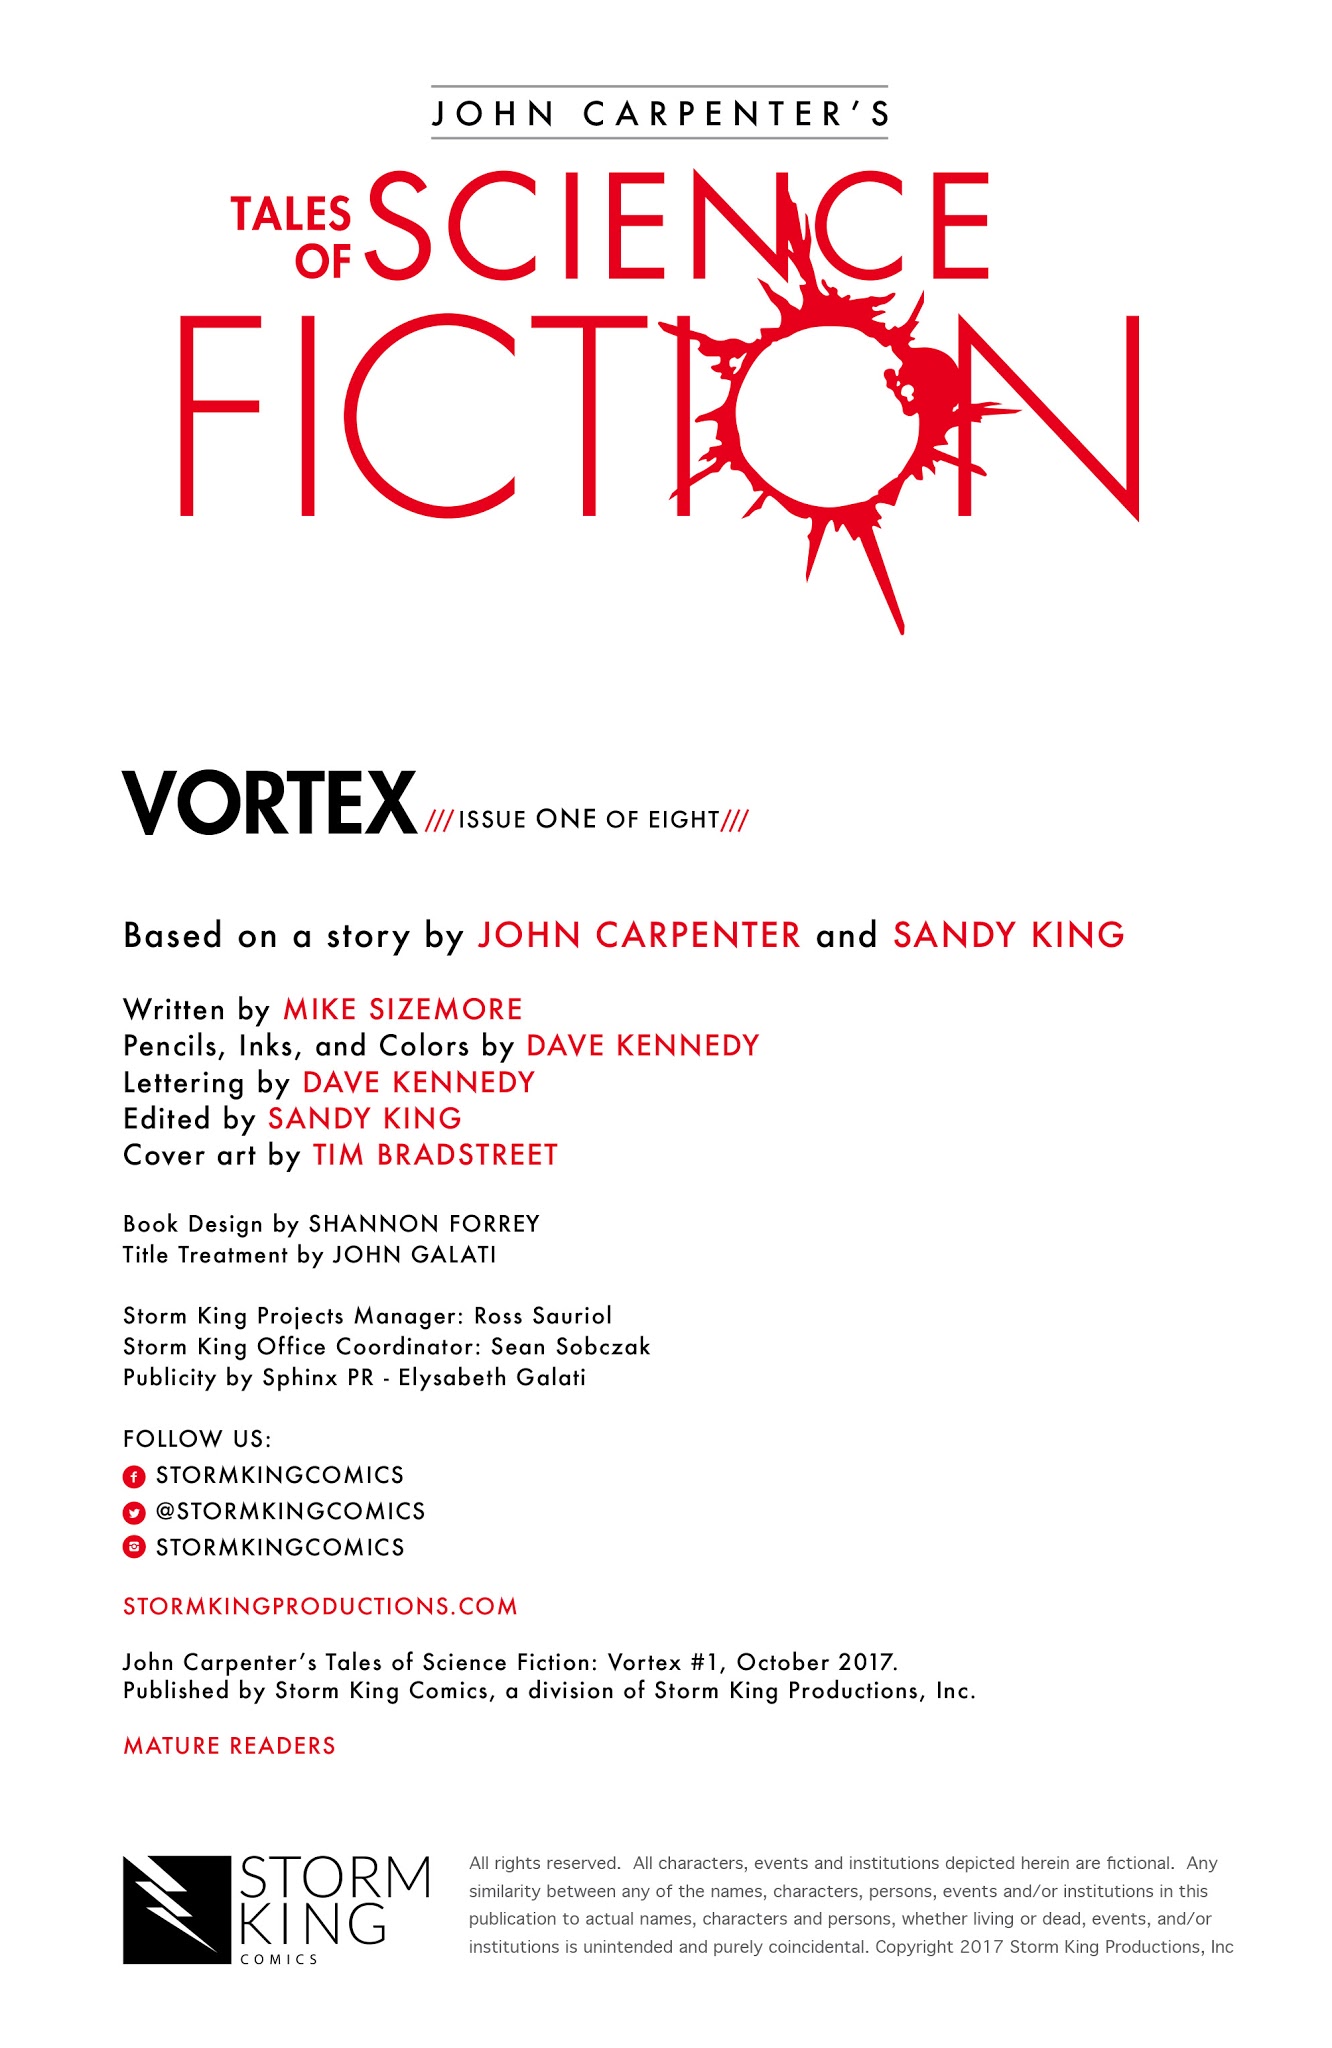 Read online John Carpenter's Tales of Science Fiction: Vortex comic -  Issue #1 - 2